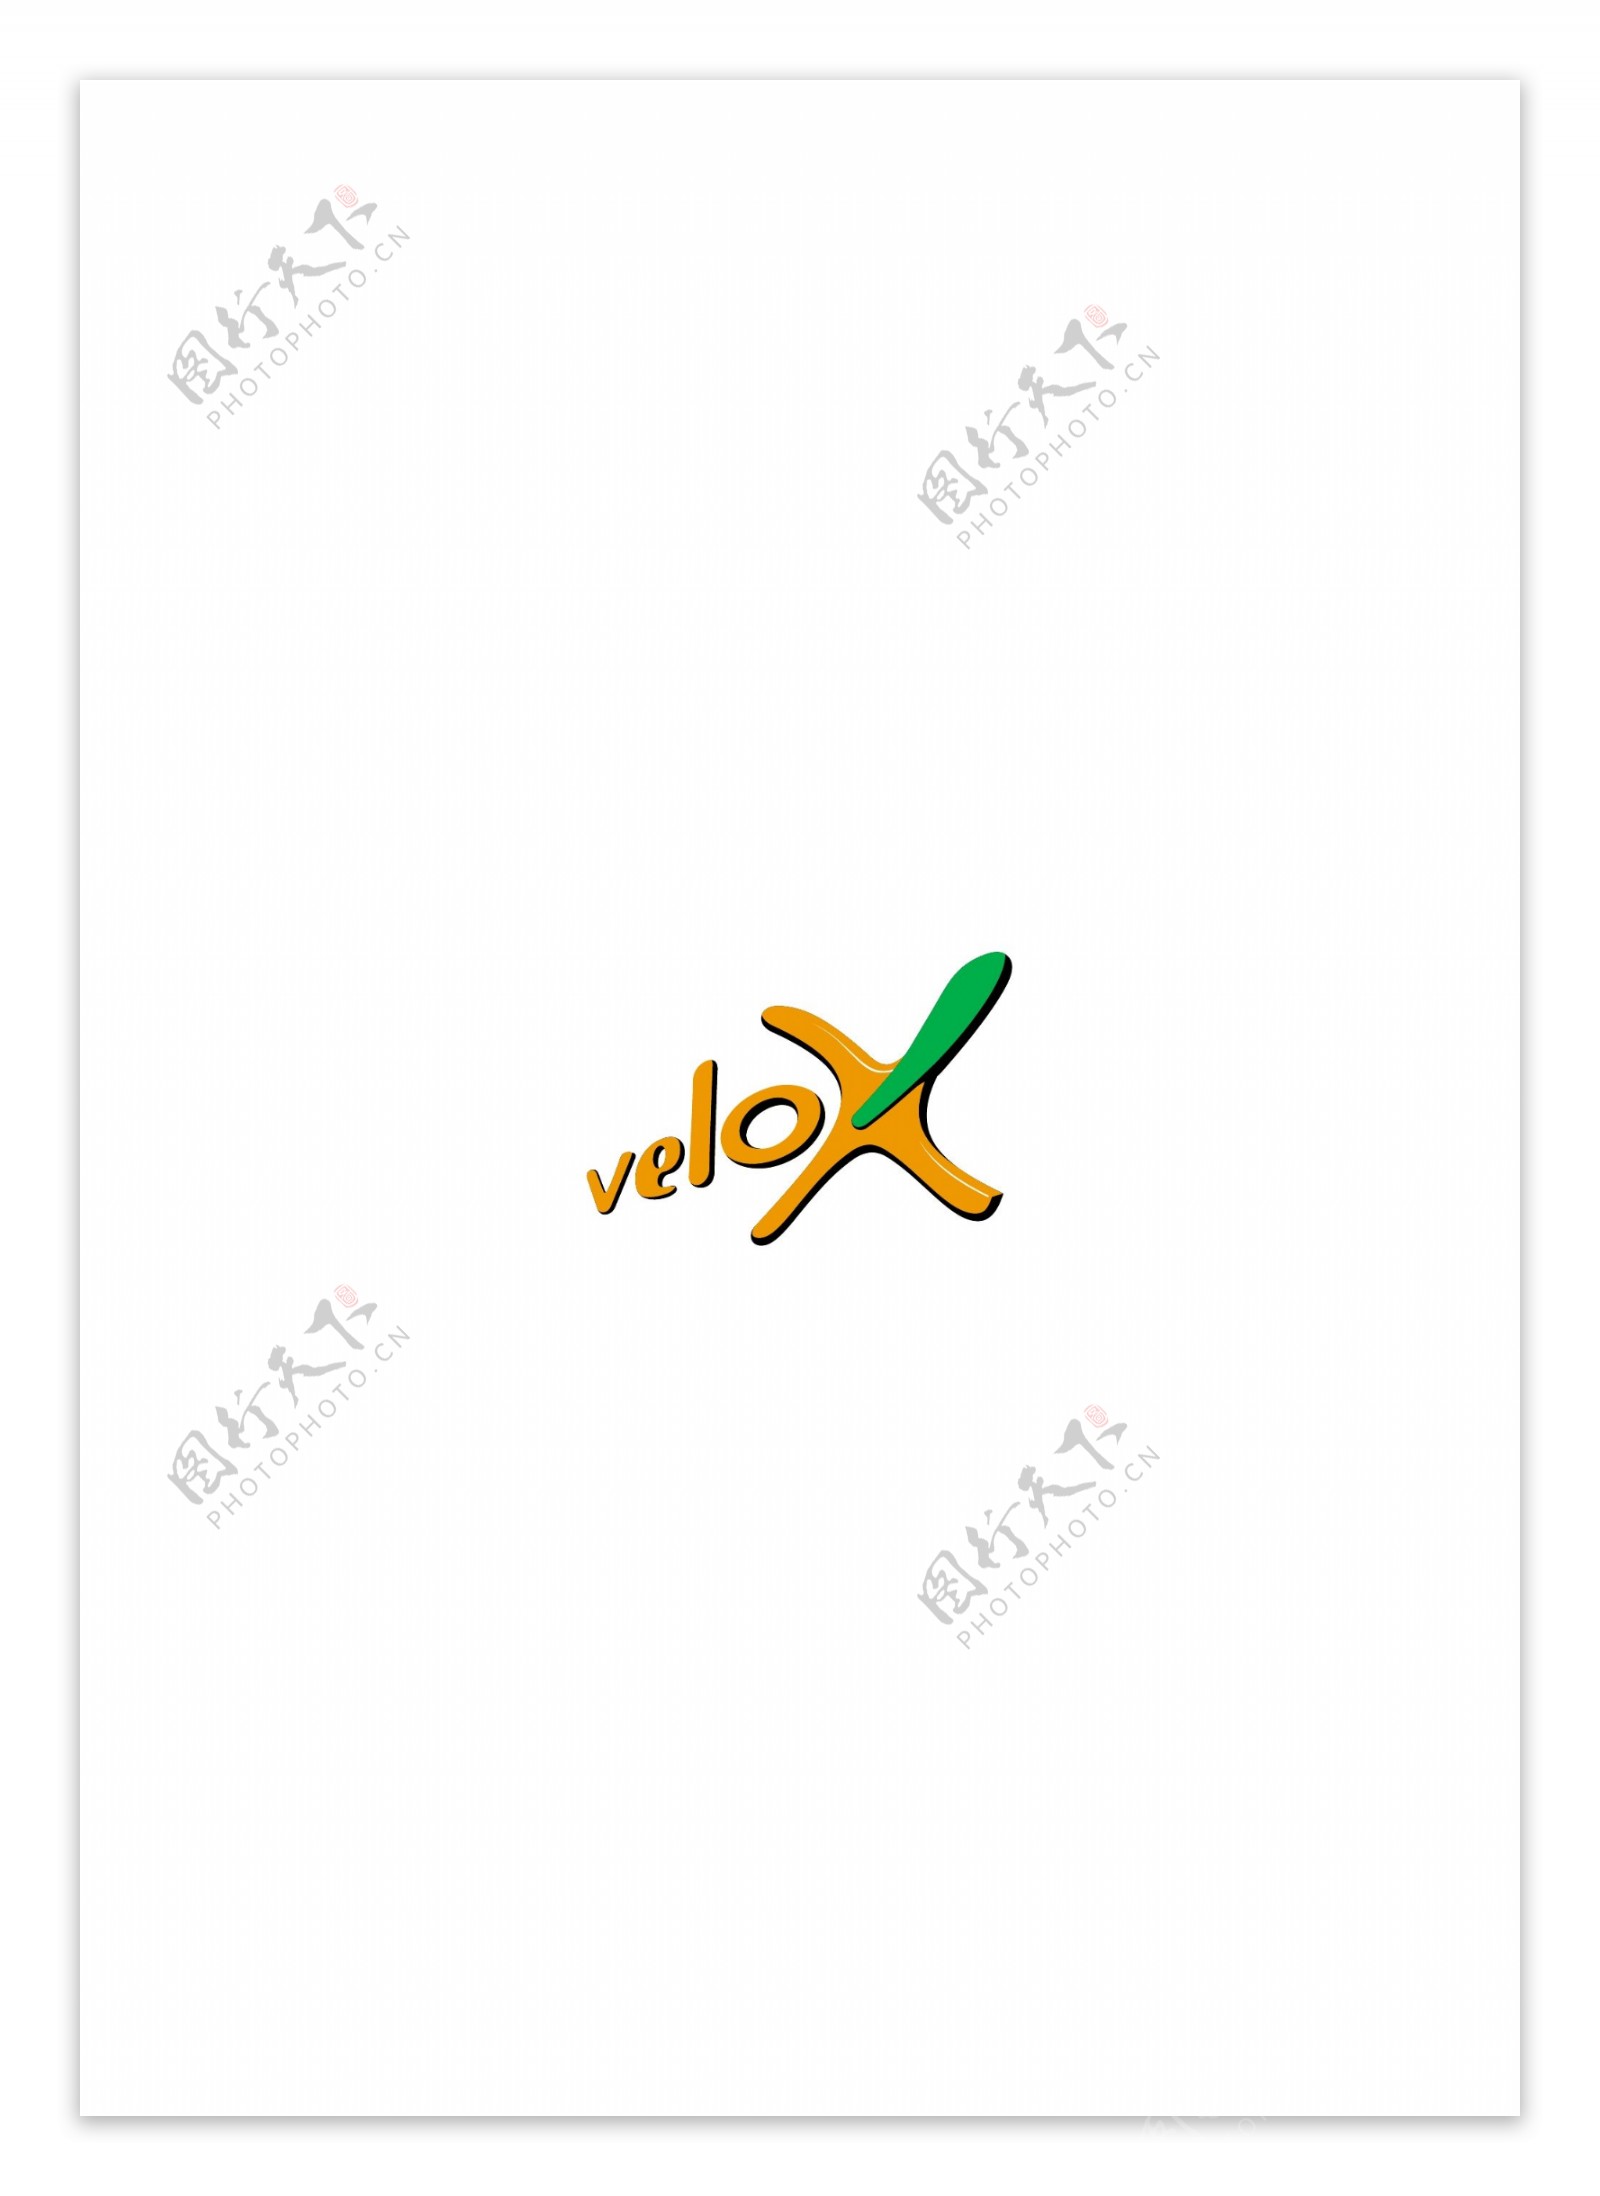 Veloxlogo设计欣赏Velox移动通讯LOGO下载标志设计欣赏